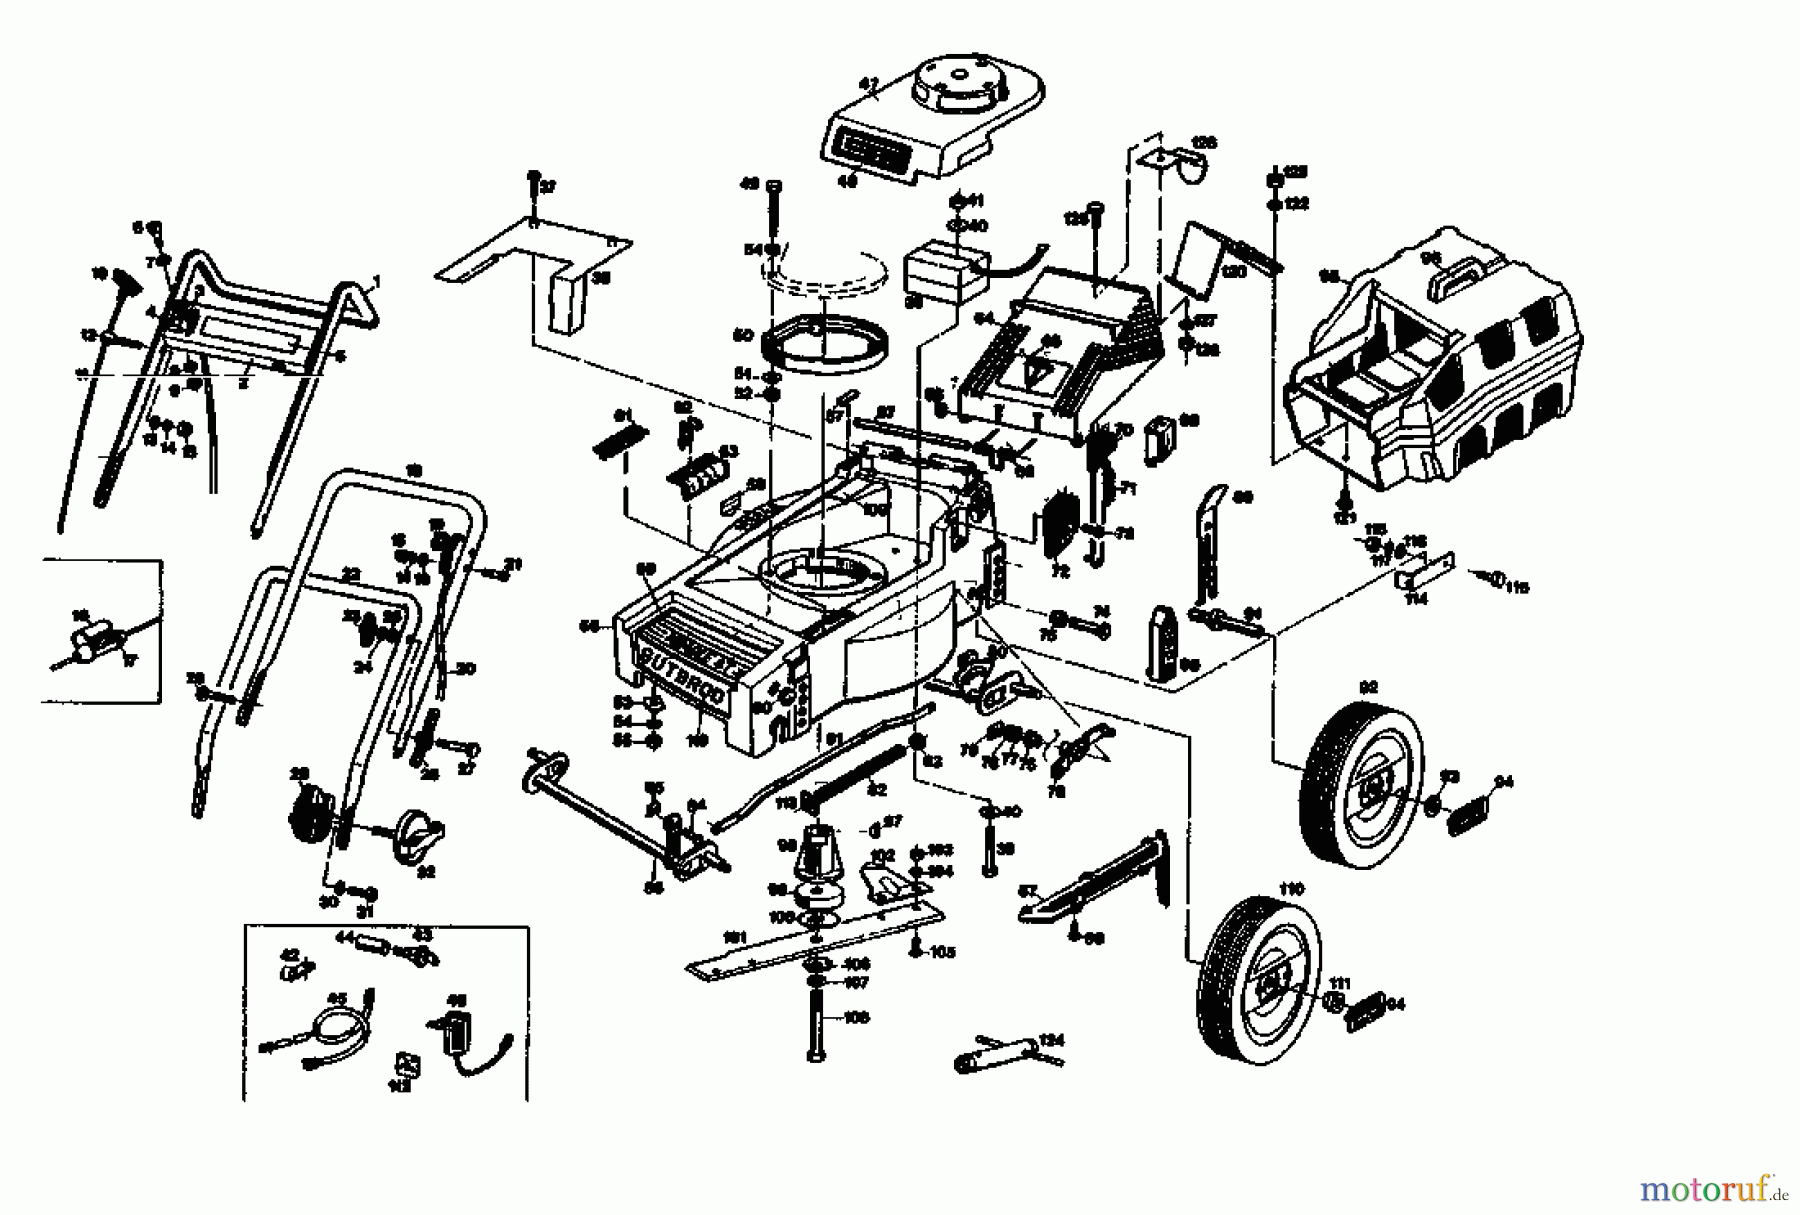  Gutbrod Petrol mower HB 40 L 02896.02  (1987) Basic machine